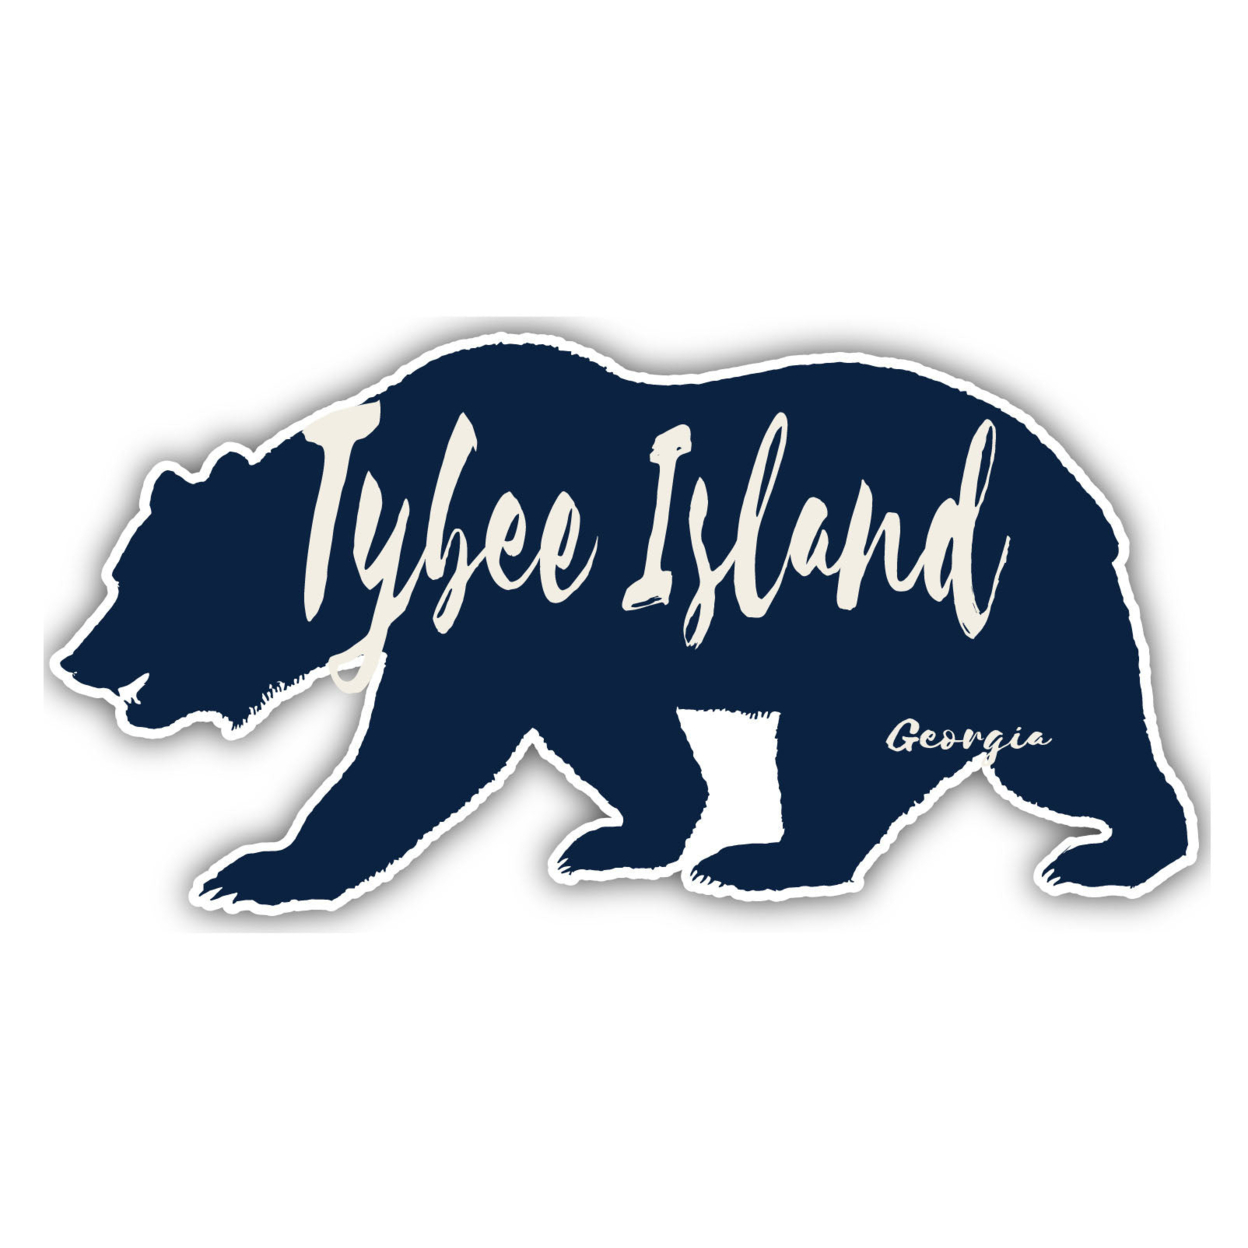 Tybee Island Georgia Souvenir Decorative Stickers (Choose Theme And Size) - Single Unit, 4-Inch, Bear